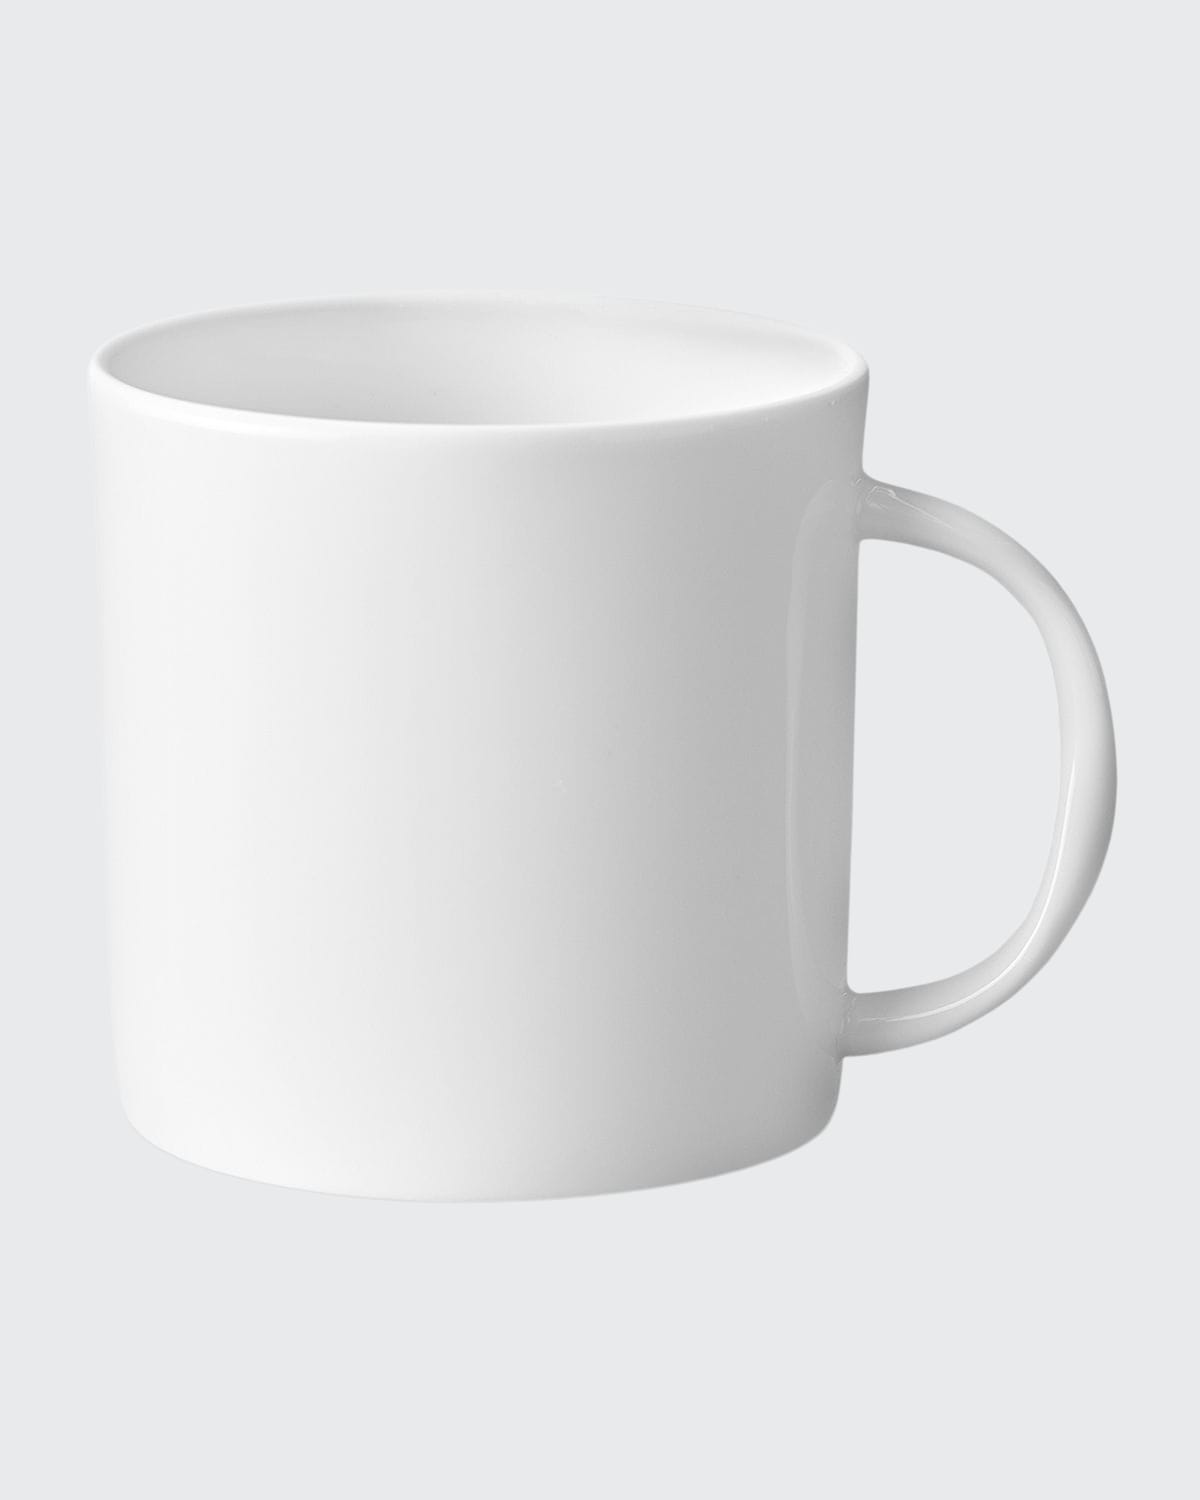 L'objet Corde Mug, White